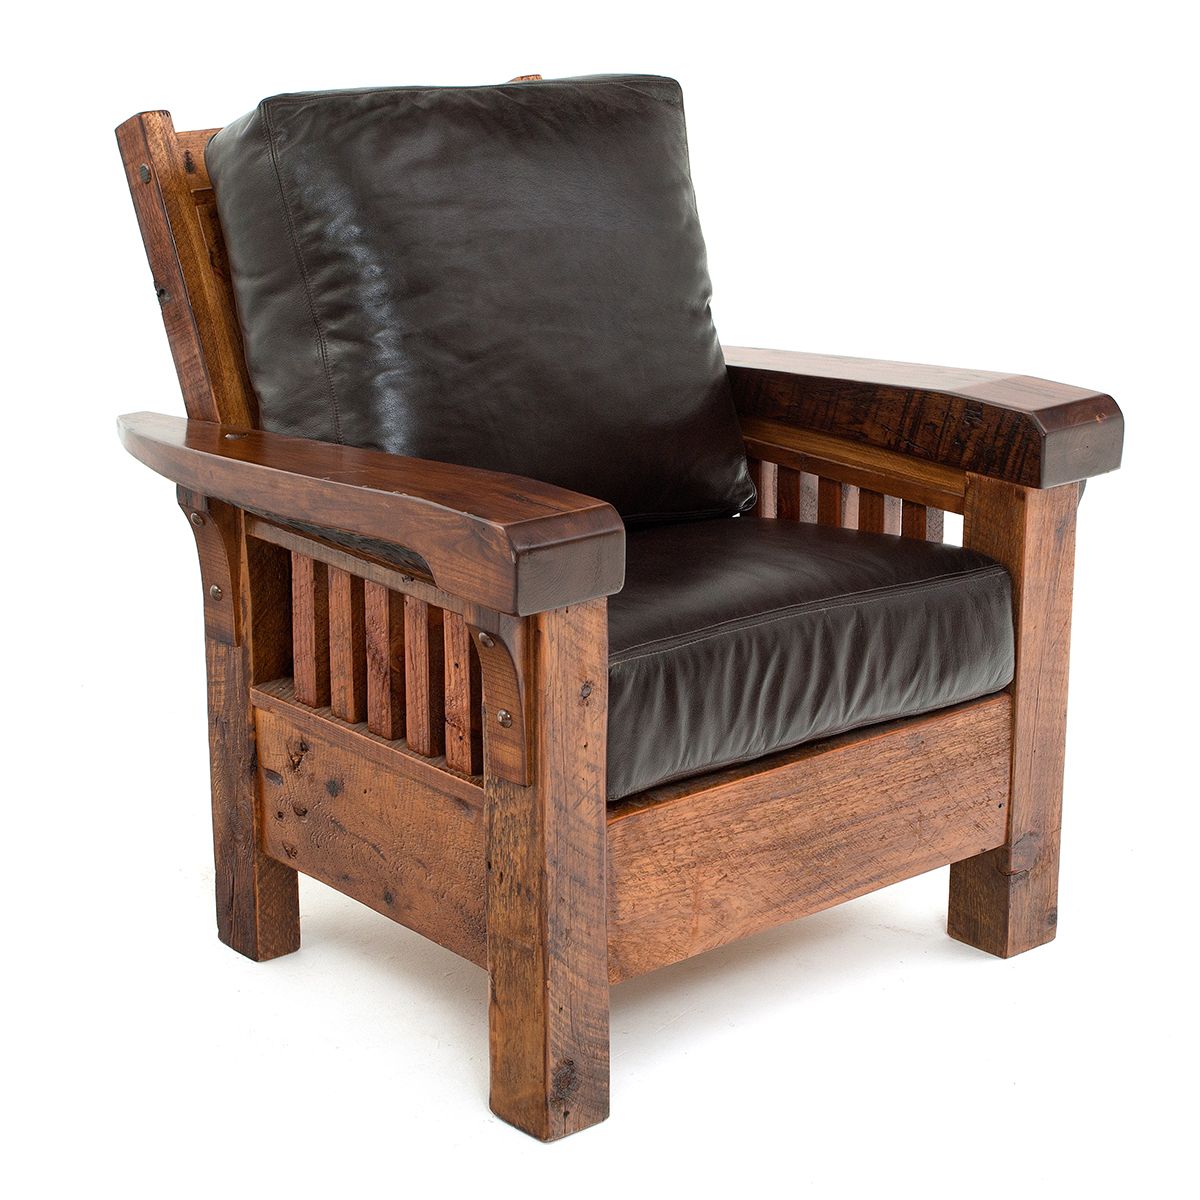 Recliner Cushion - Wooden Recliners